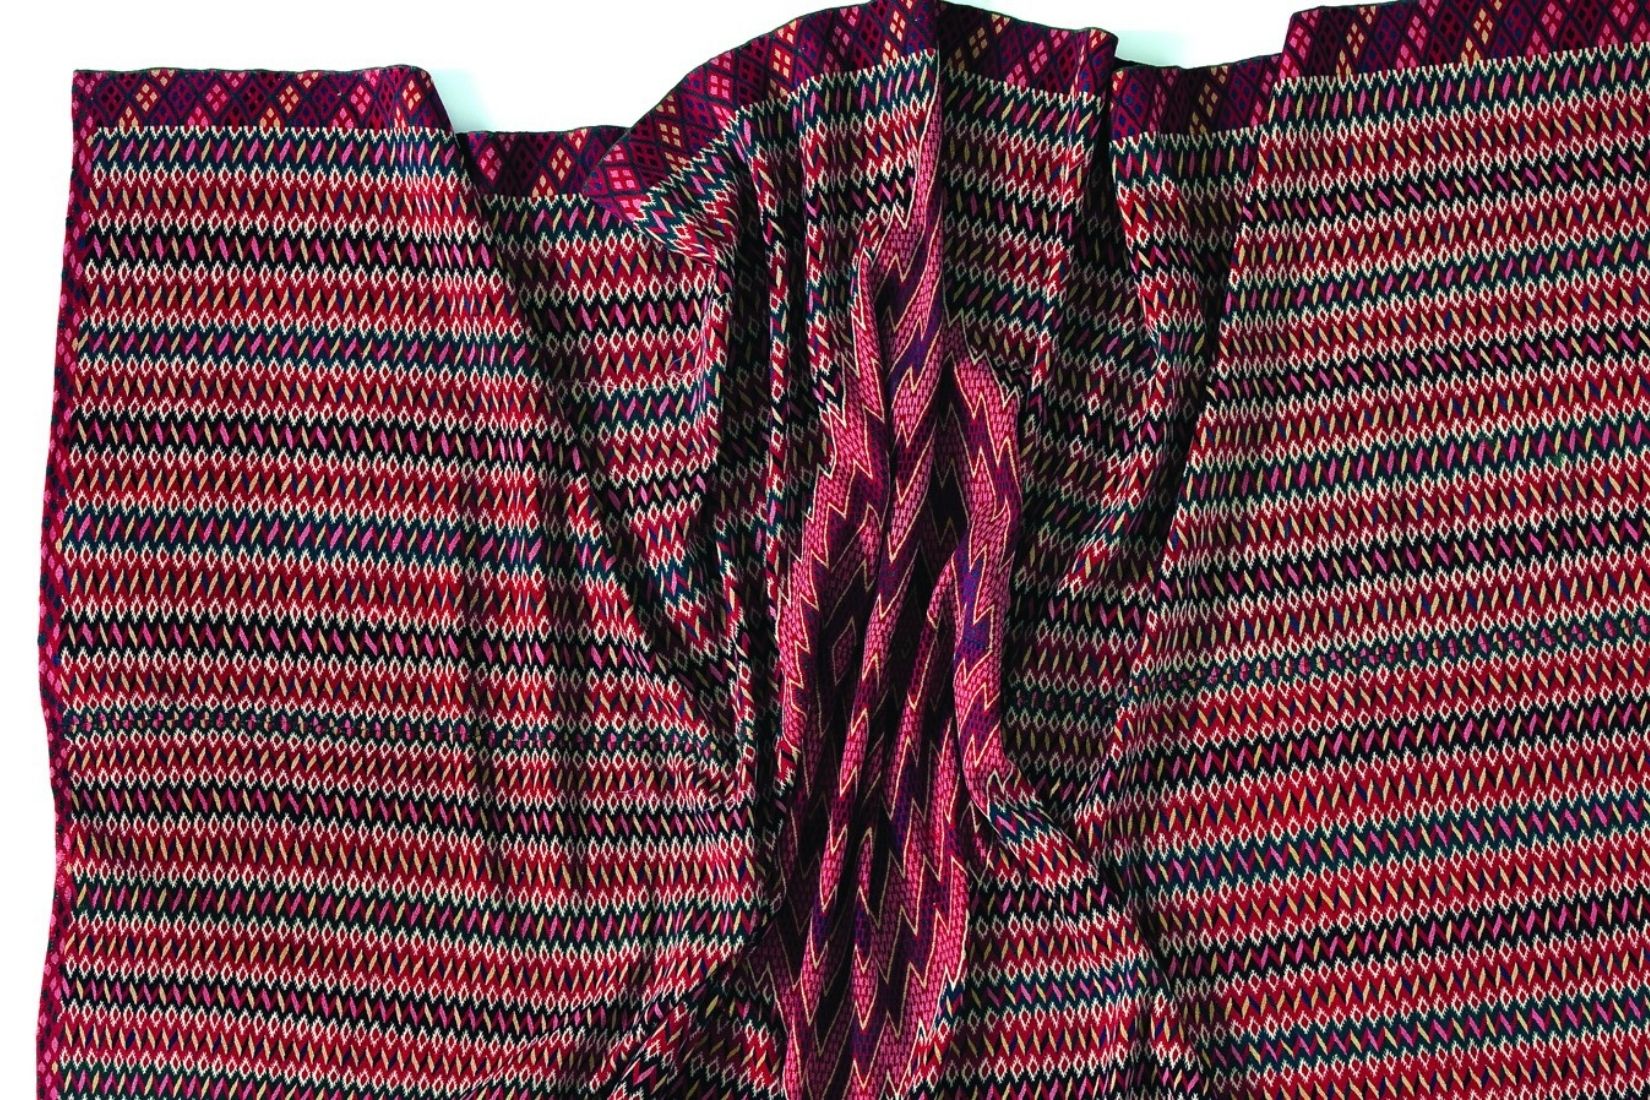 Sarape de lana con urdimbre de algodón. Del libro El Sarape de Saltillo. Grupo Azabache. Col. Museo Franz Mayer. (Foto: Francisco Kochen).